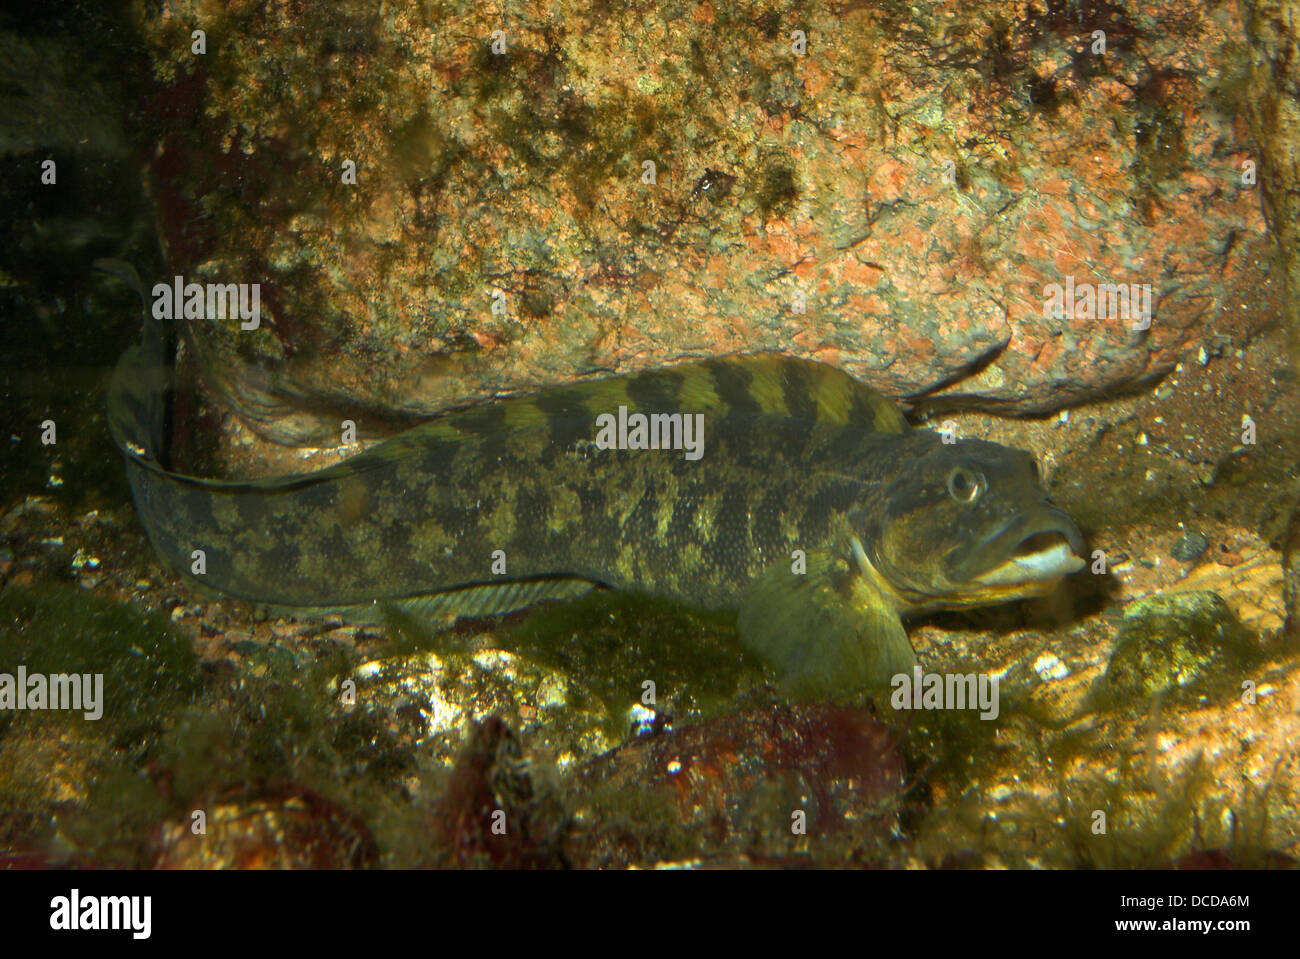 Aalmutter, Aal-Mutter, Zoarces viviparus, eel pout, viviparous blenny Stock Photo